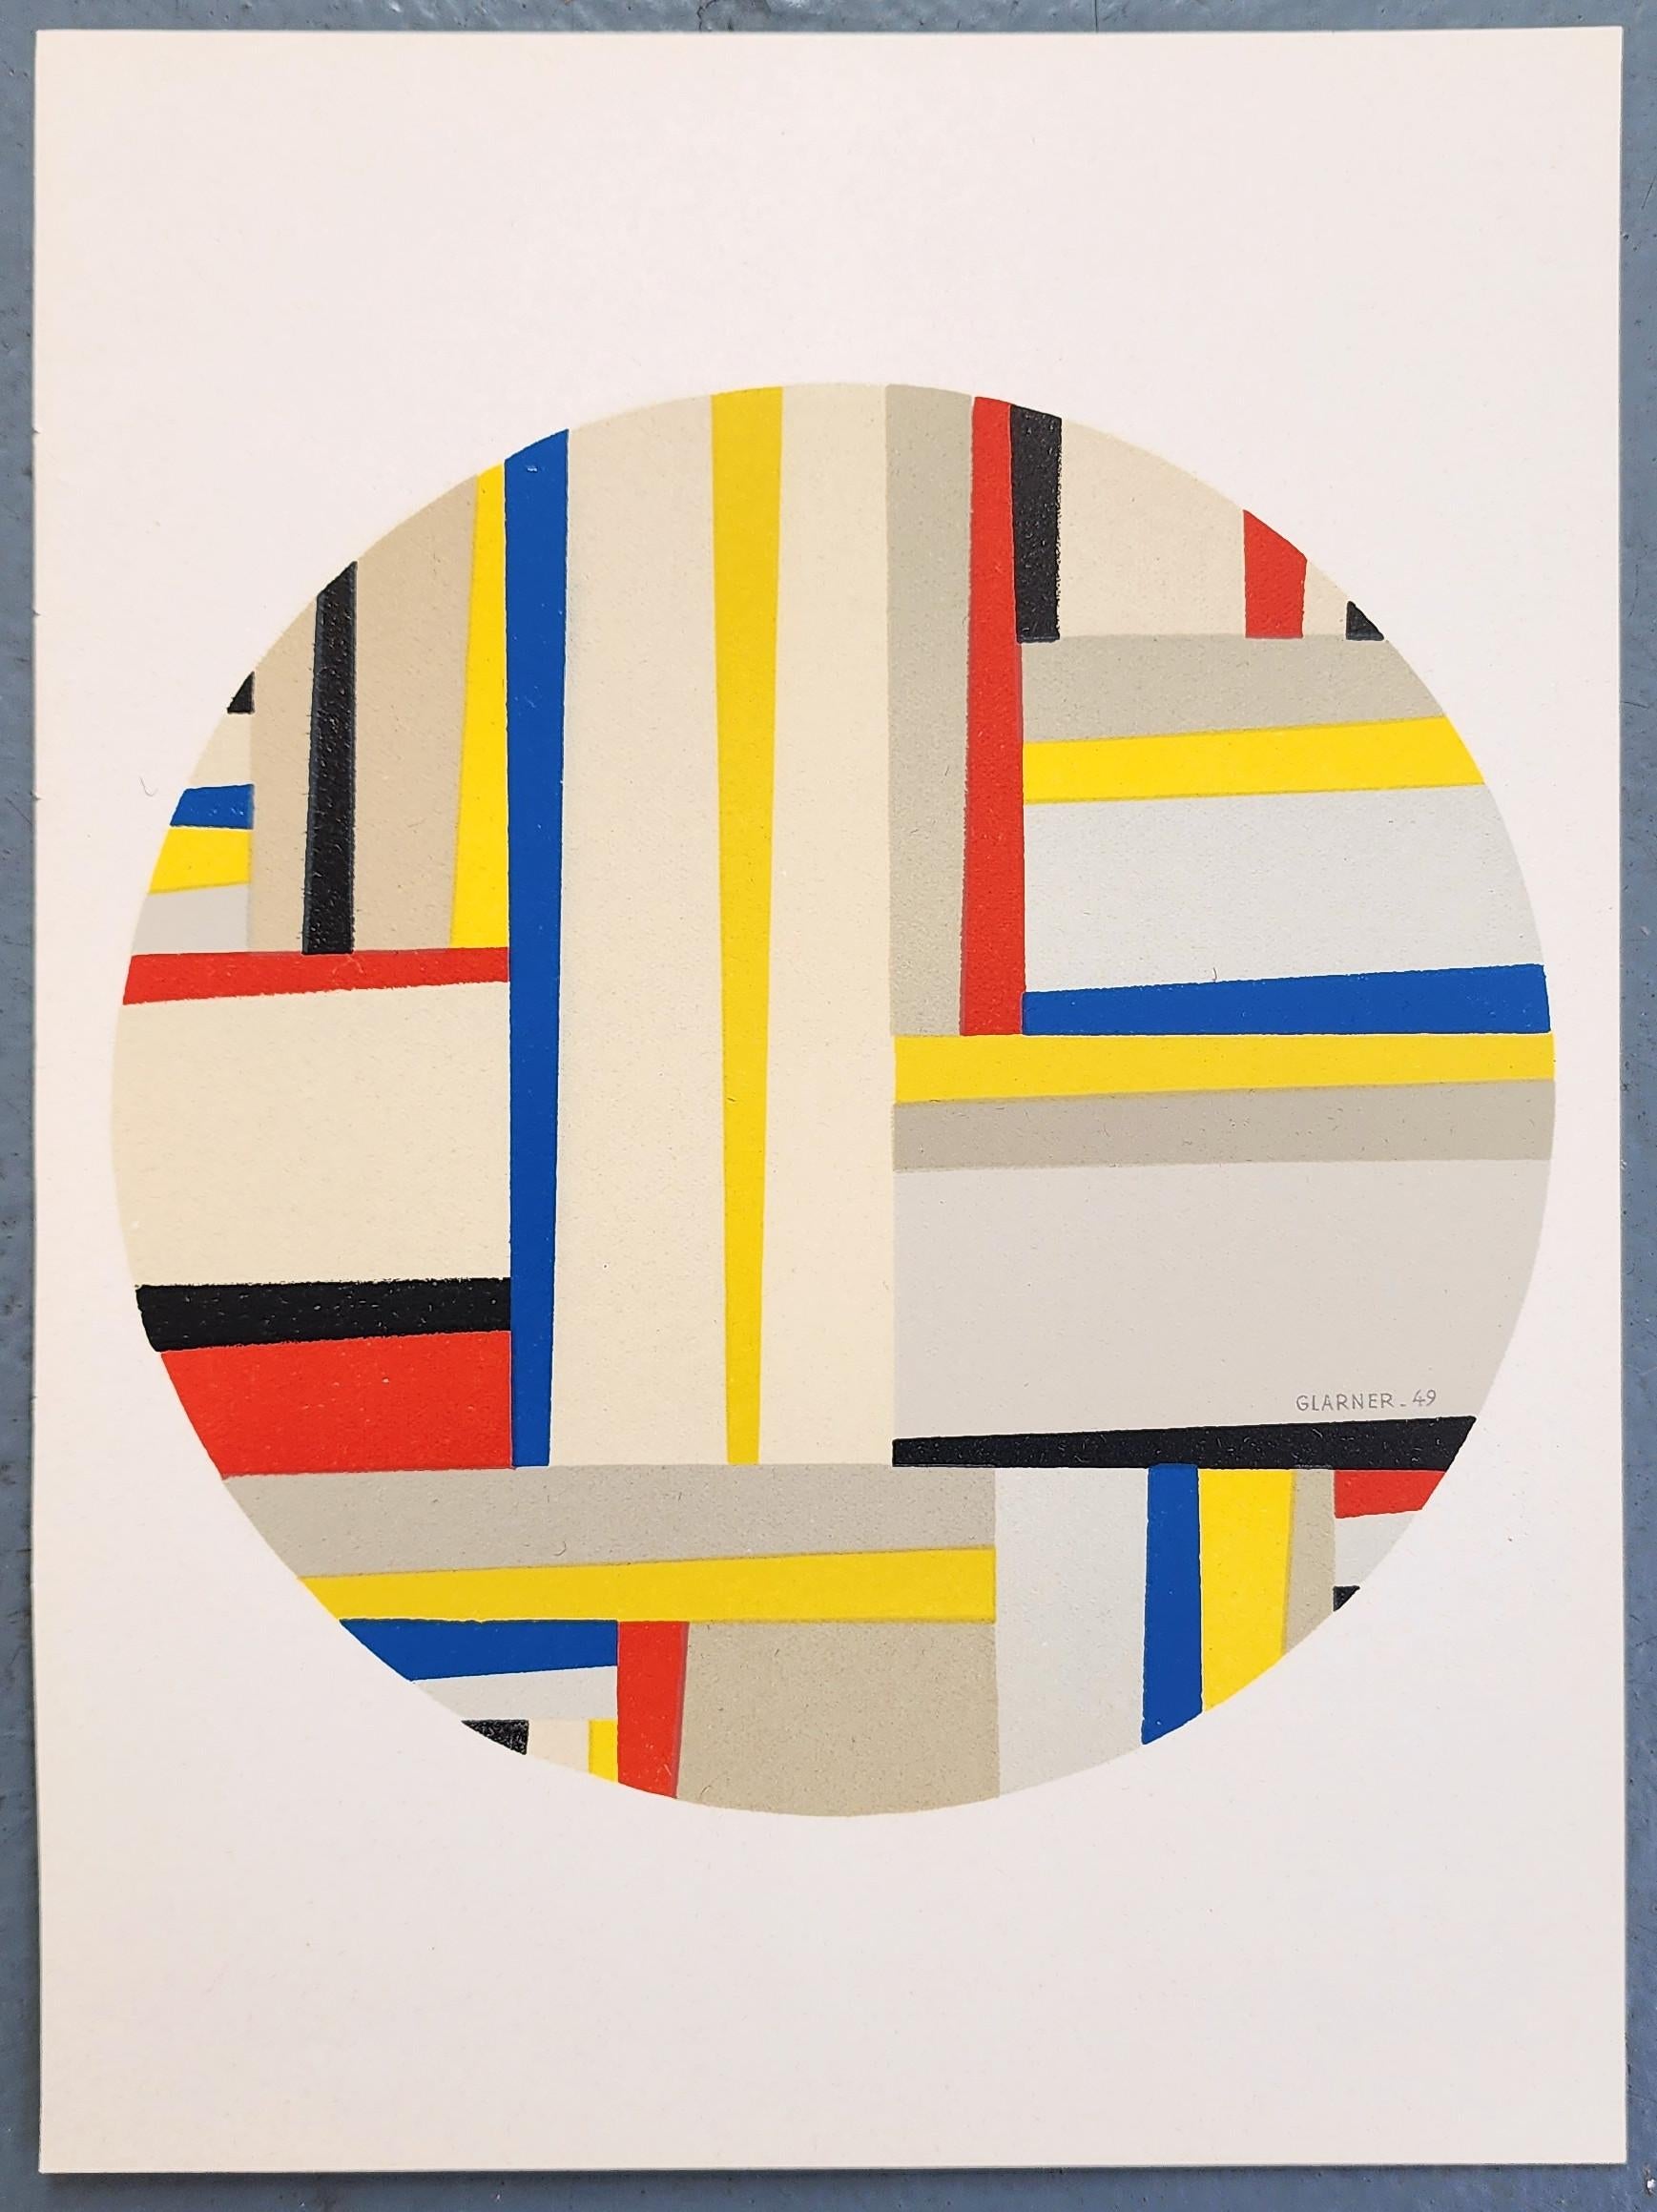 Abstract Print Fritz Glarner - Tondo (Mourlot, Paris, Impression, Design, Moderne, ~30% PRIX DE SOLDE, ÉTAT LIMITÉE)